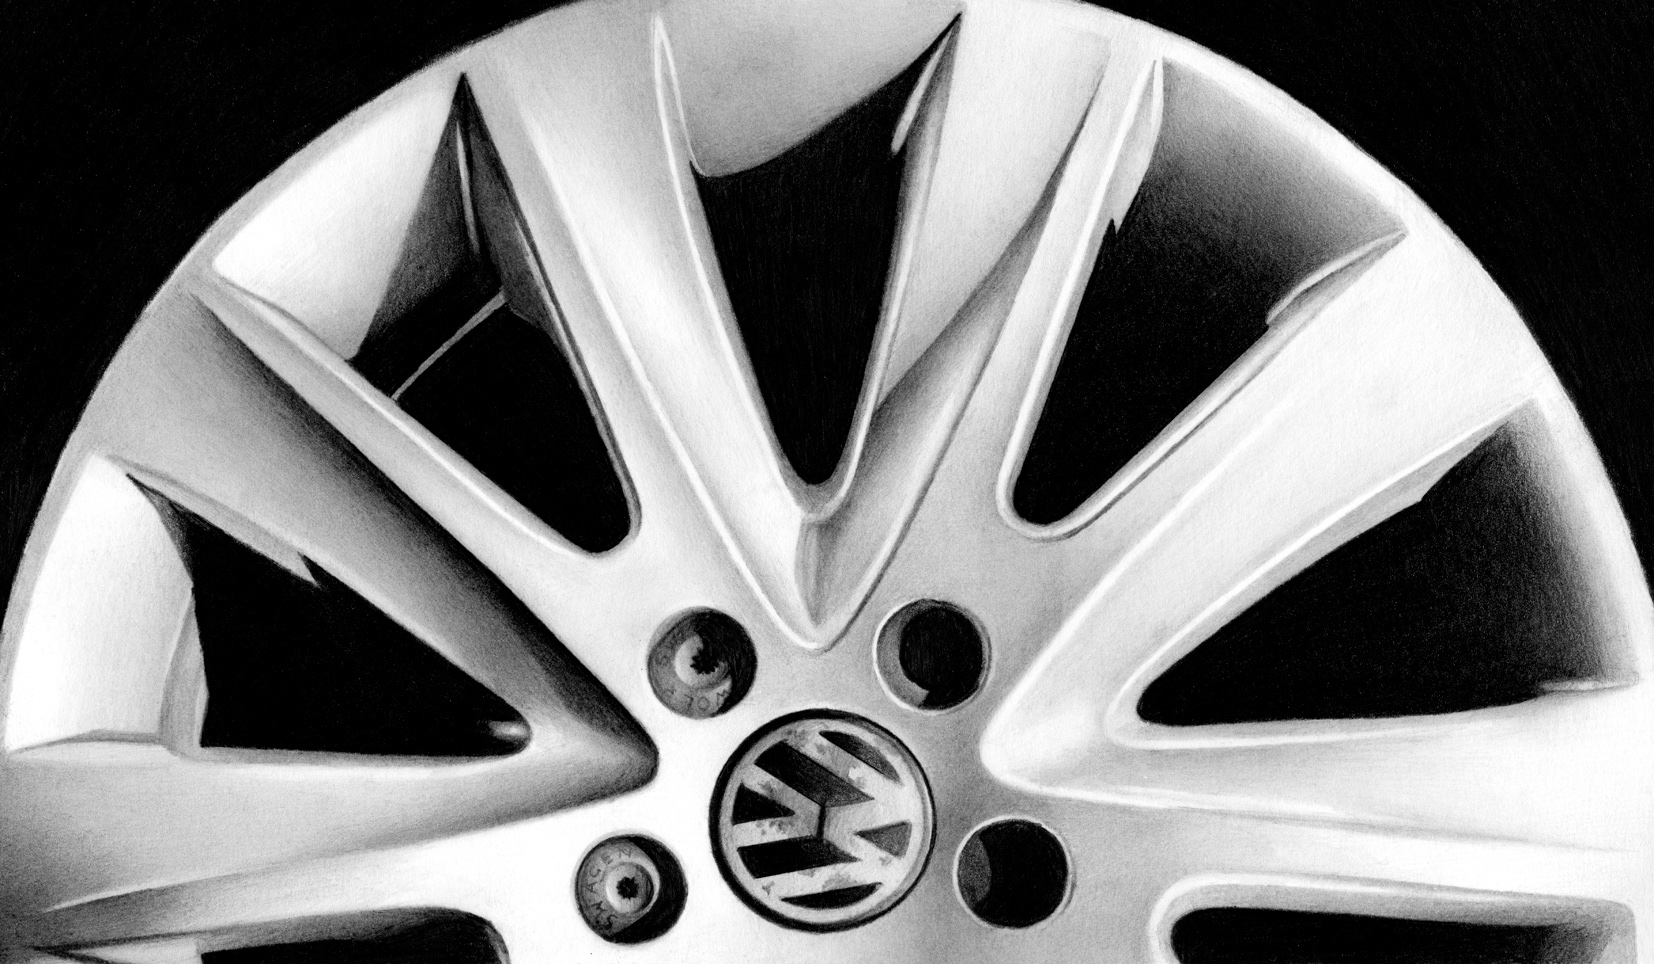 Car Wheel Hub VW Detail